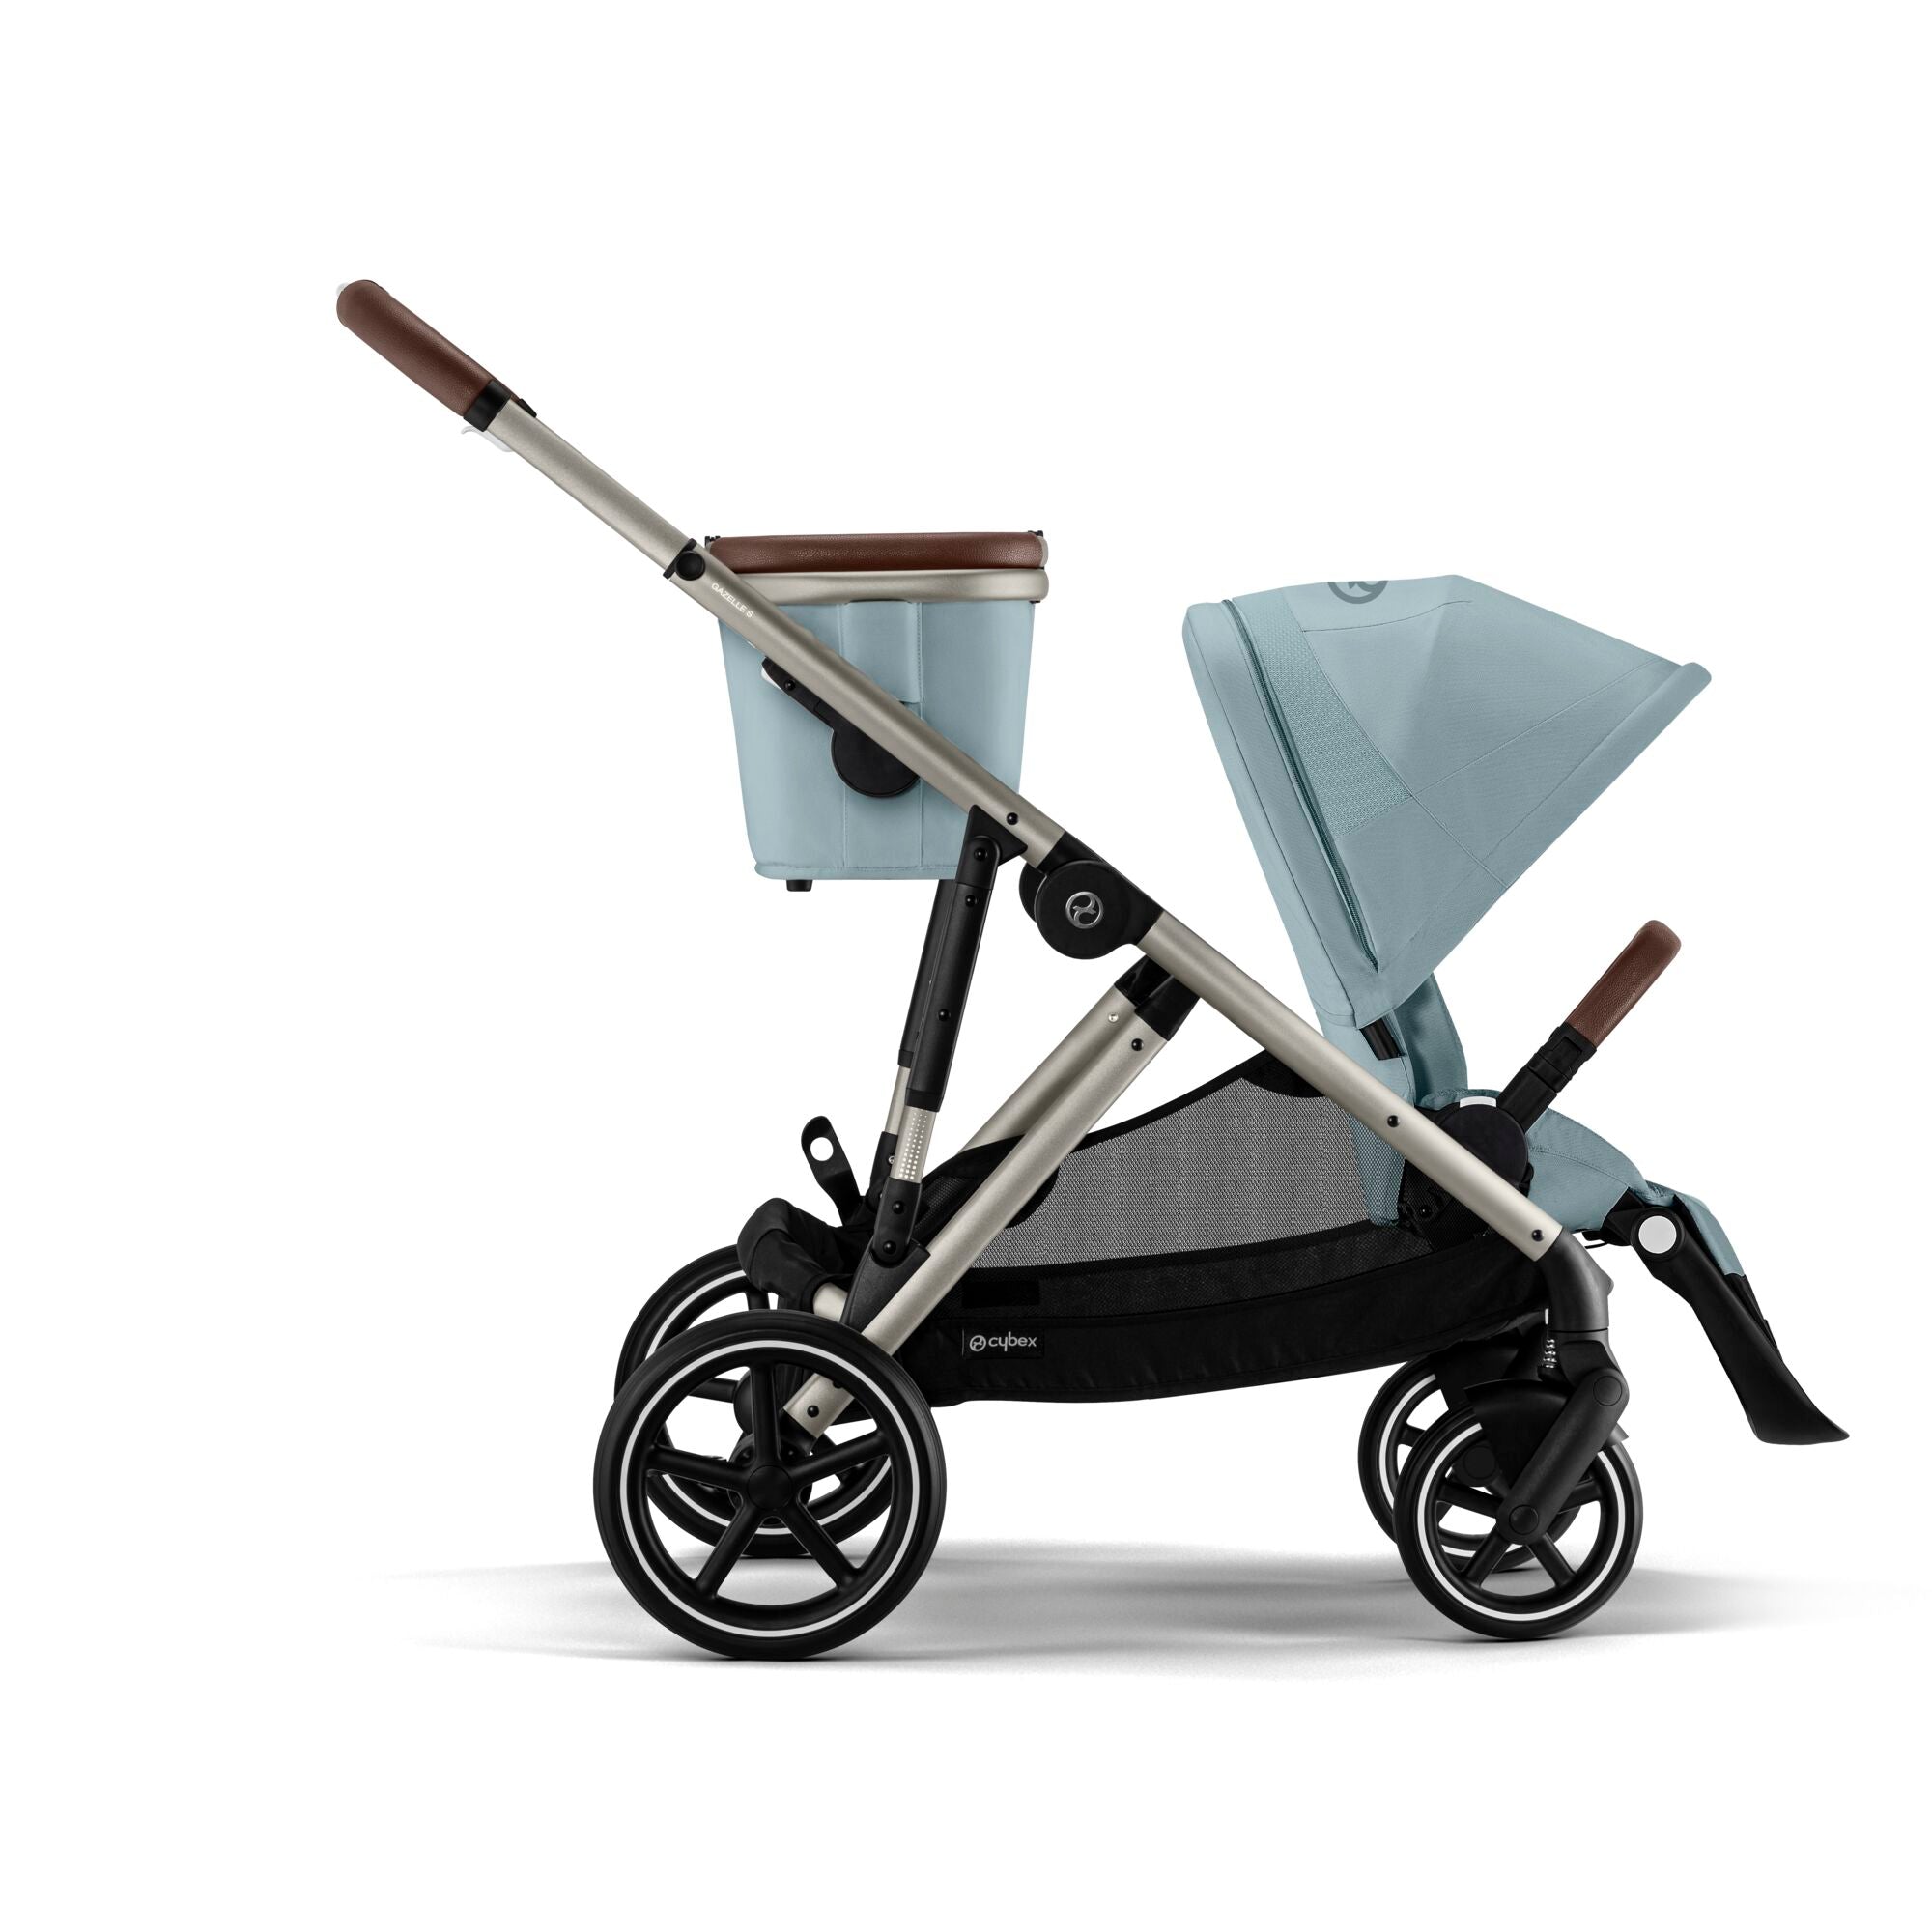 Cybex Gazelle S 2 Stroller - ANB Baby -4063846313877$500 - $1000